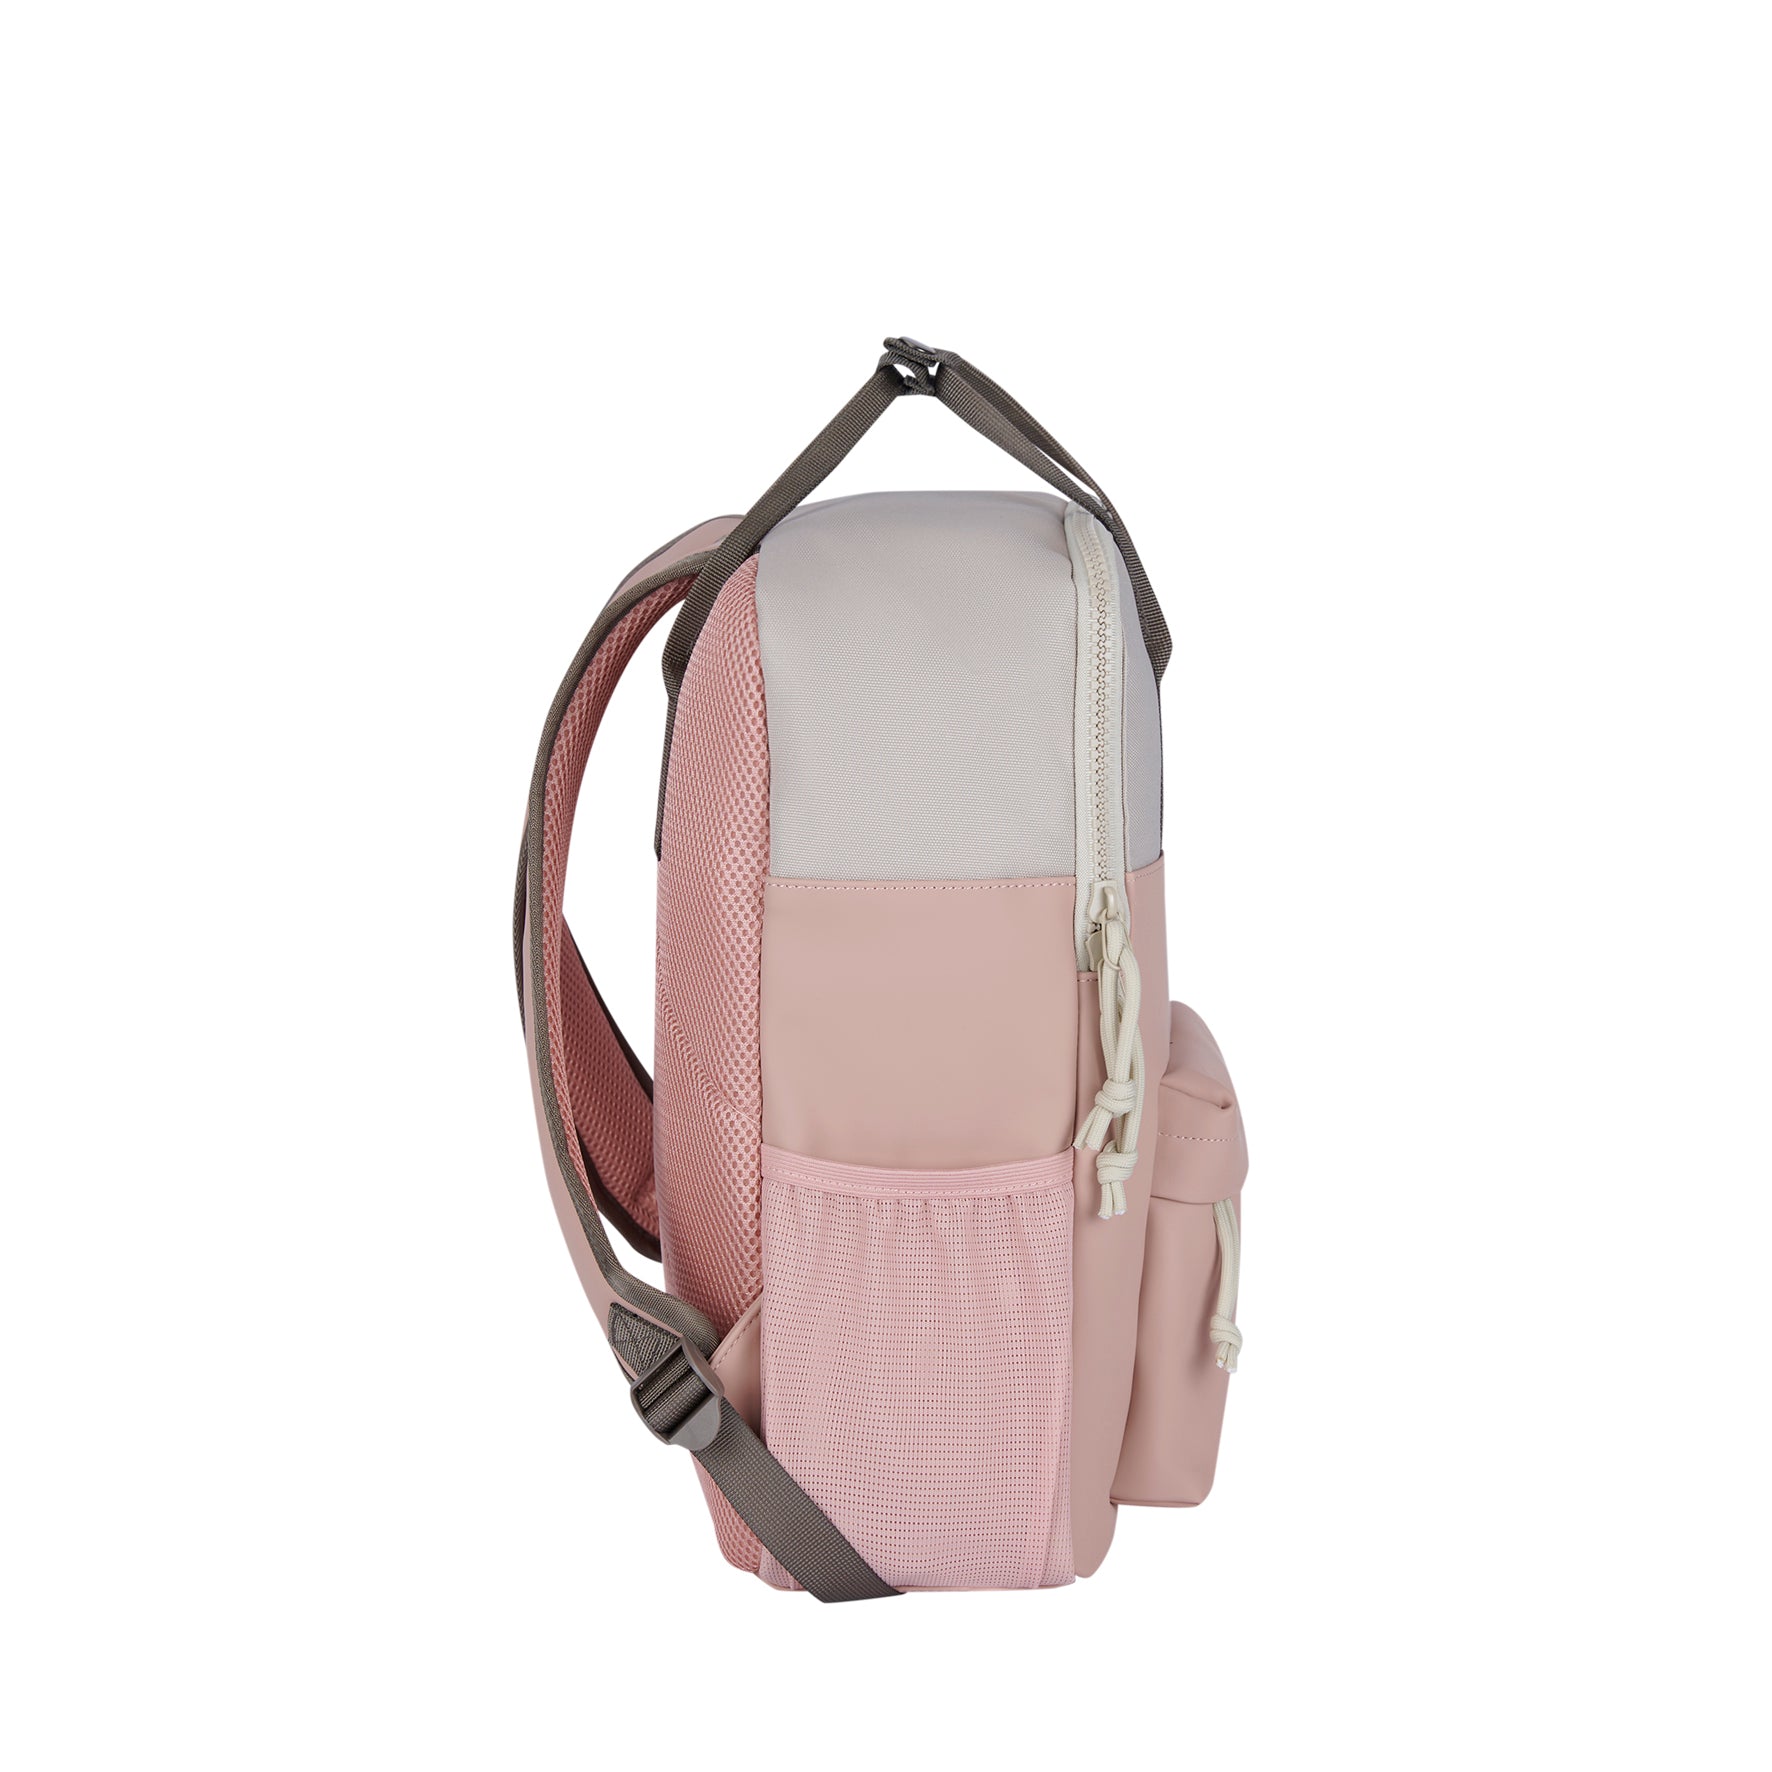 Backpack 'Springfield' old pink/beige